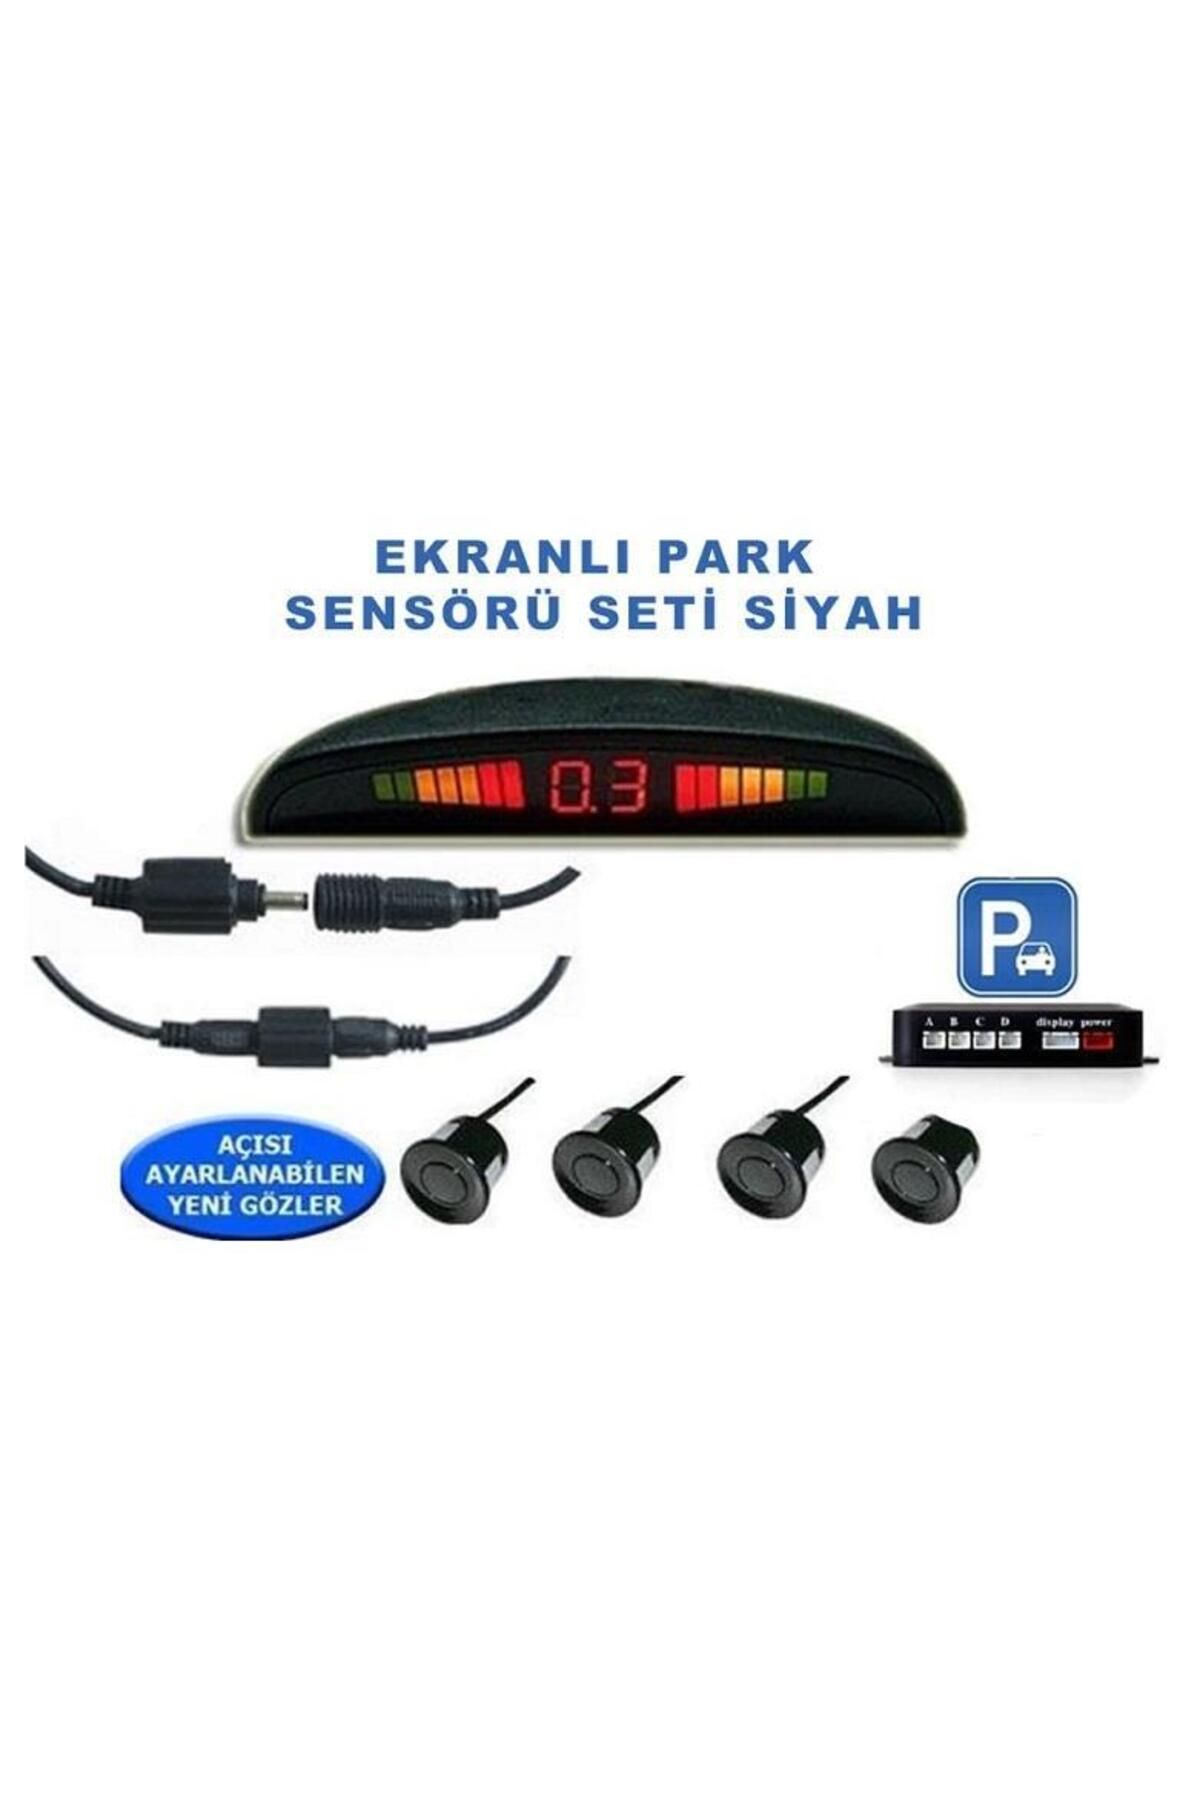 Tetra Park Sensörü Ses Ikazlı Oval Göstergeli (22 MM) Siyah